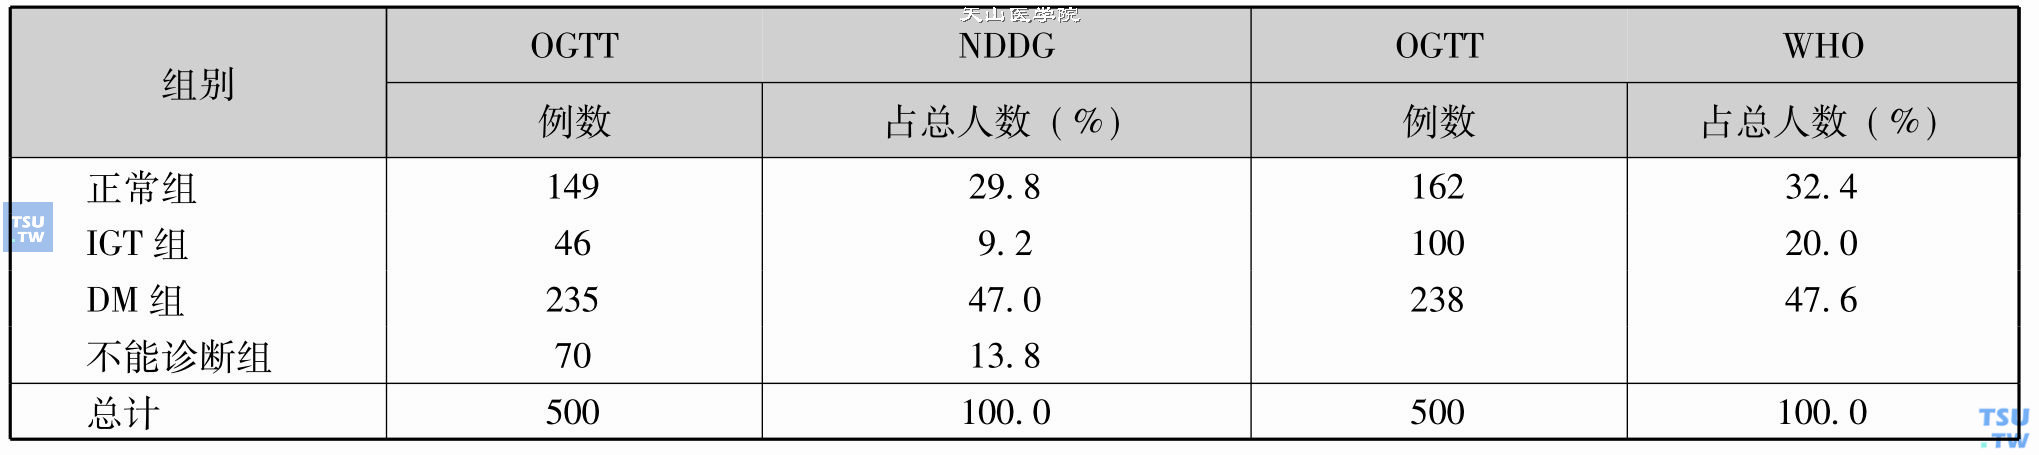 NDDG和WHO两种糖尿病标准与HbA1c（糖化血红蛋白）诊断符合率的比较